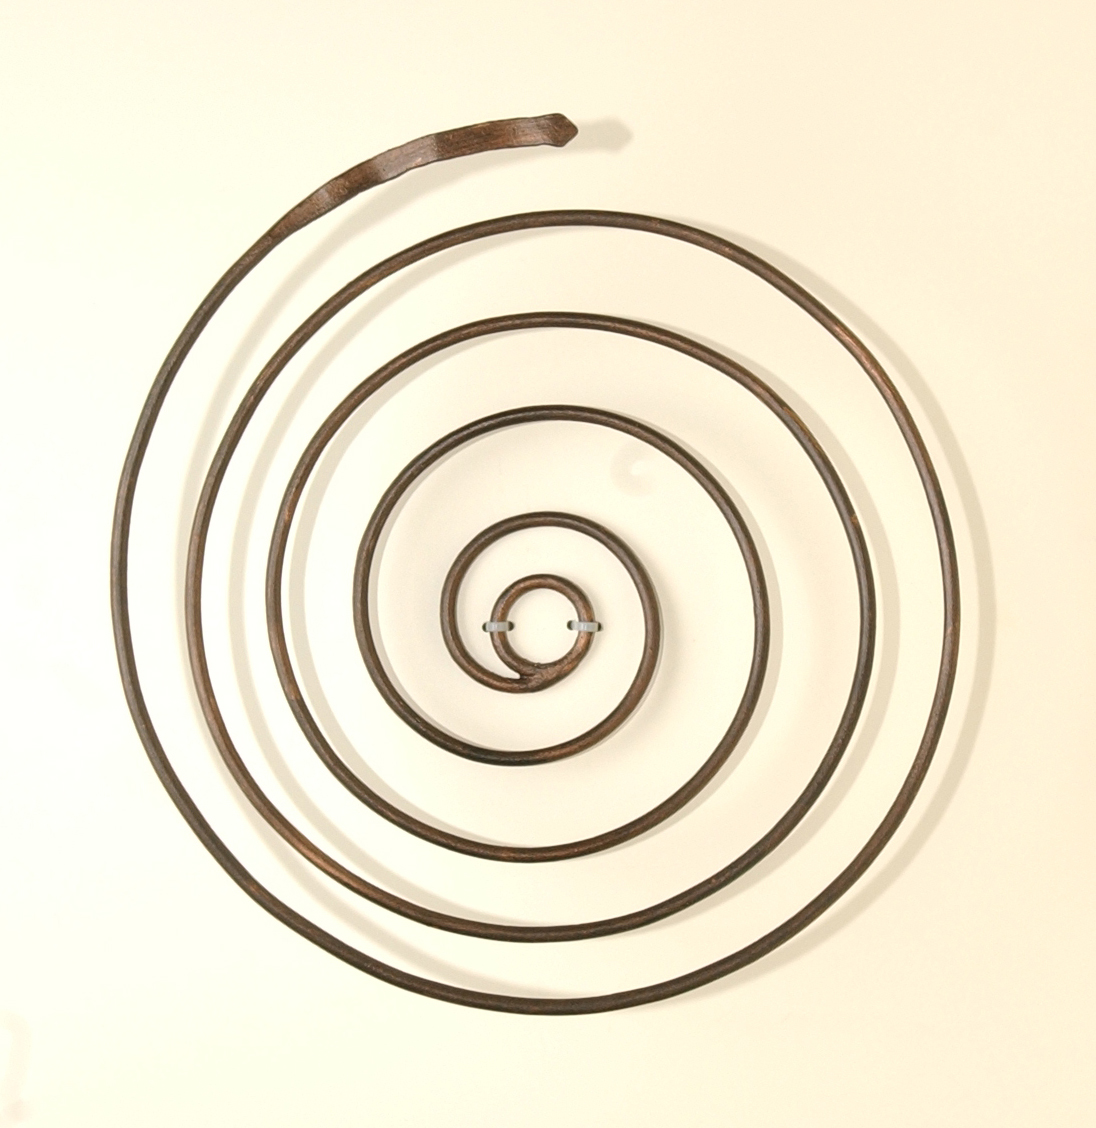 Obra Spirale I<a style='float:right;color:#ccc' href='https://www3.al.sp.gov.br/repositorio/noticia/hist/Rosa Schmidt SpiraleI.jpg' target=_blank><i class='bi bi-zoom-in'></i> Clique para ver a imagem </a>